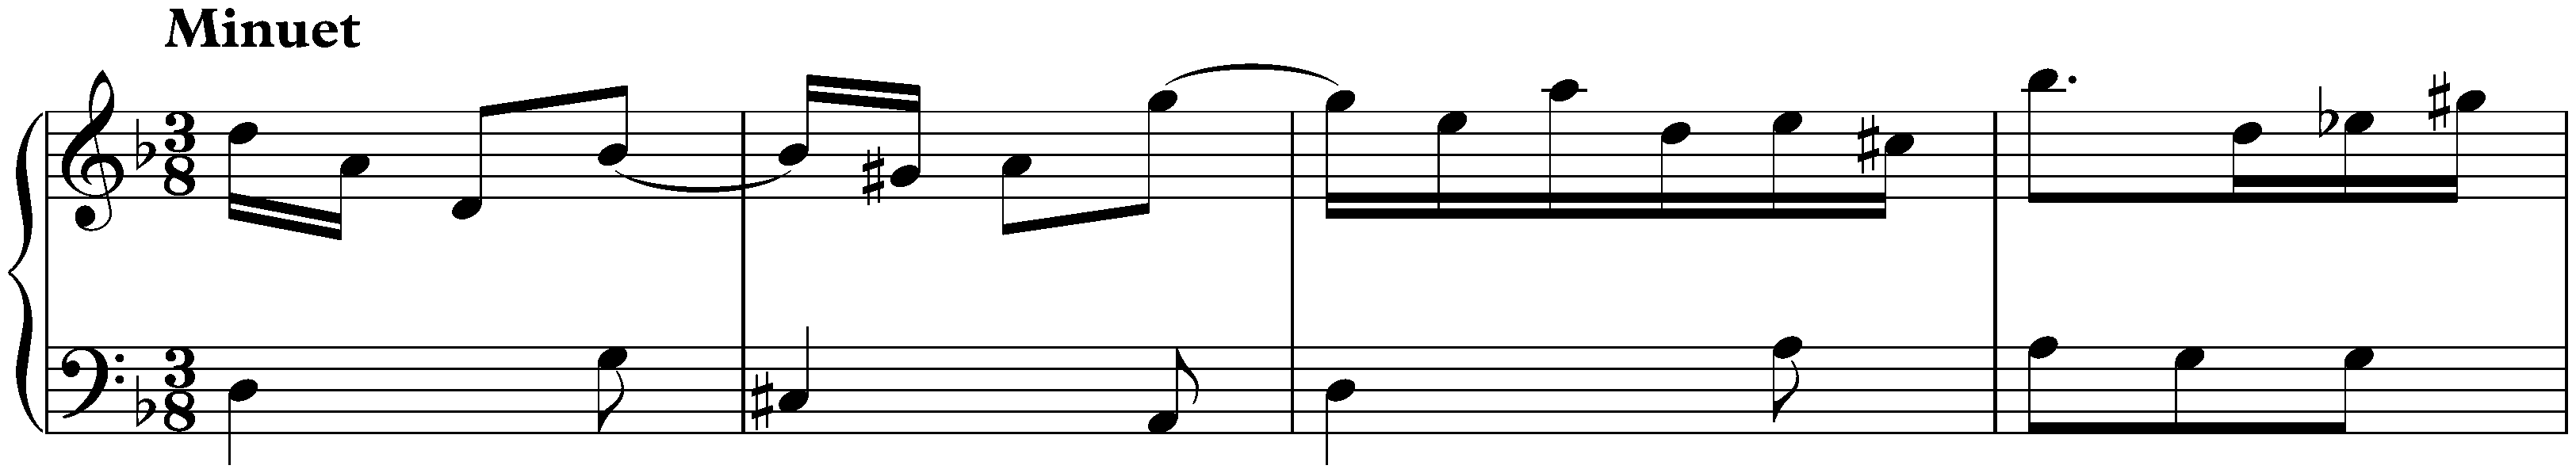 Sonata in D minor, K. 77; 2. Minuet